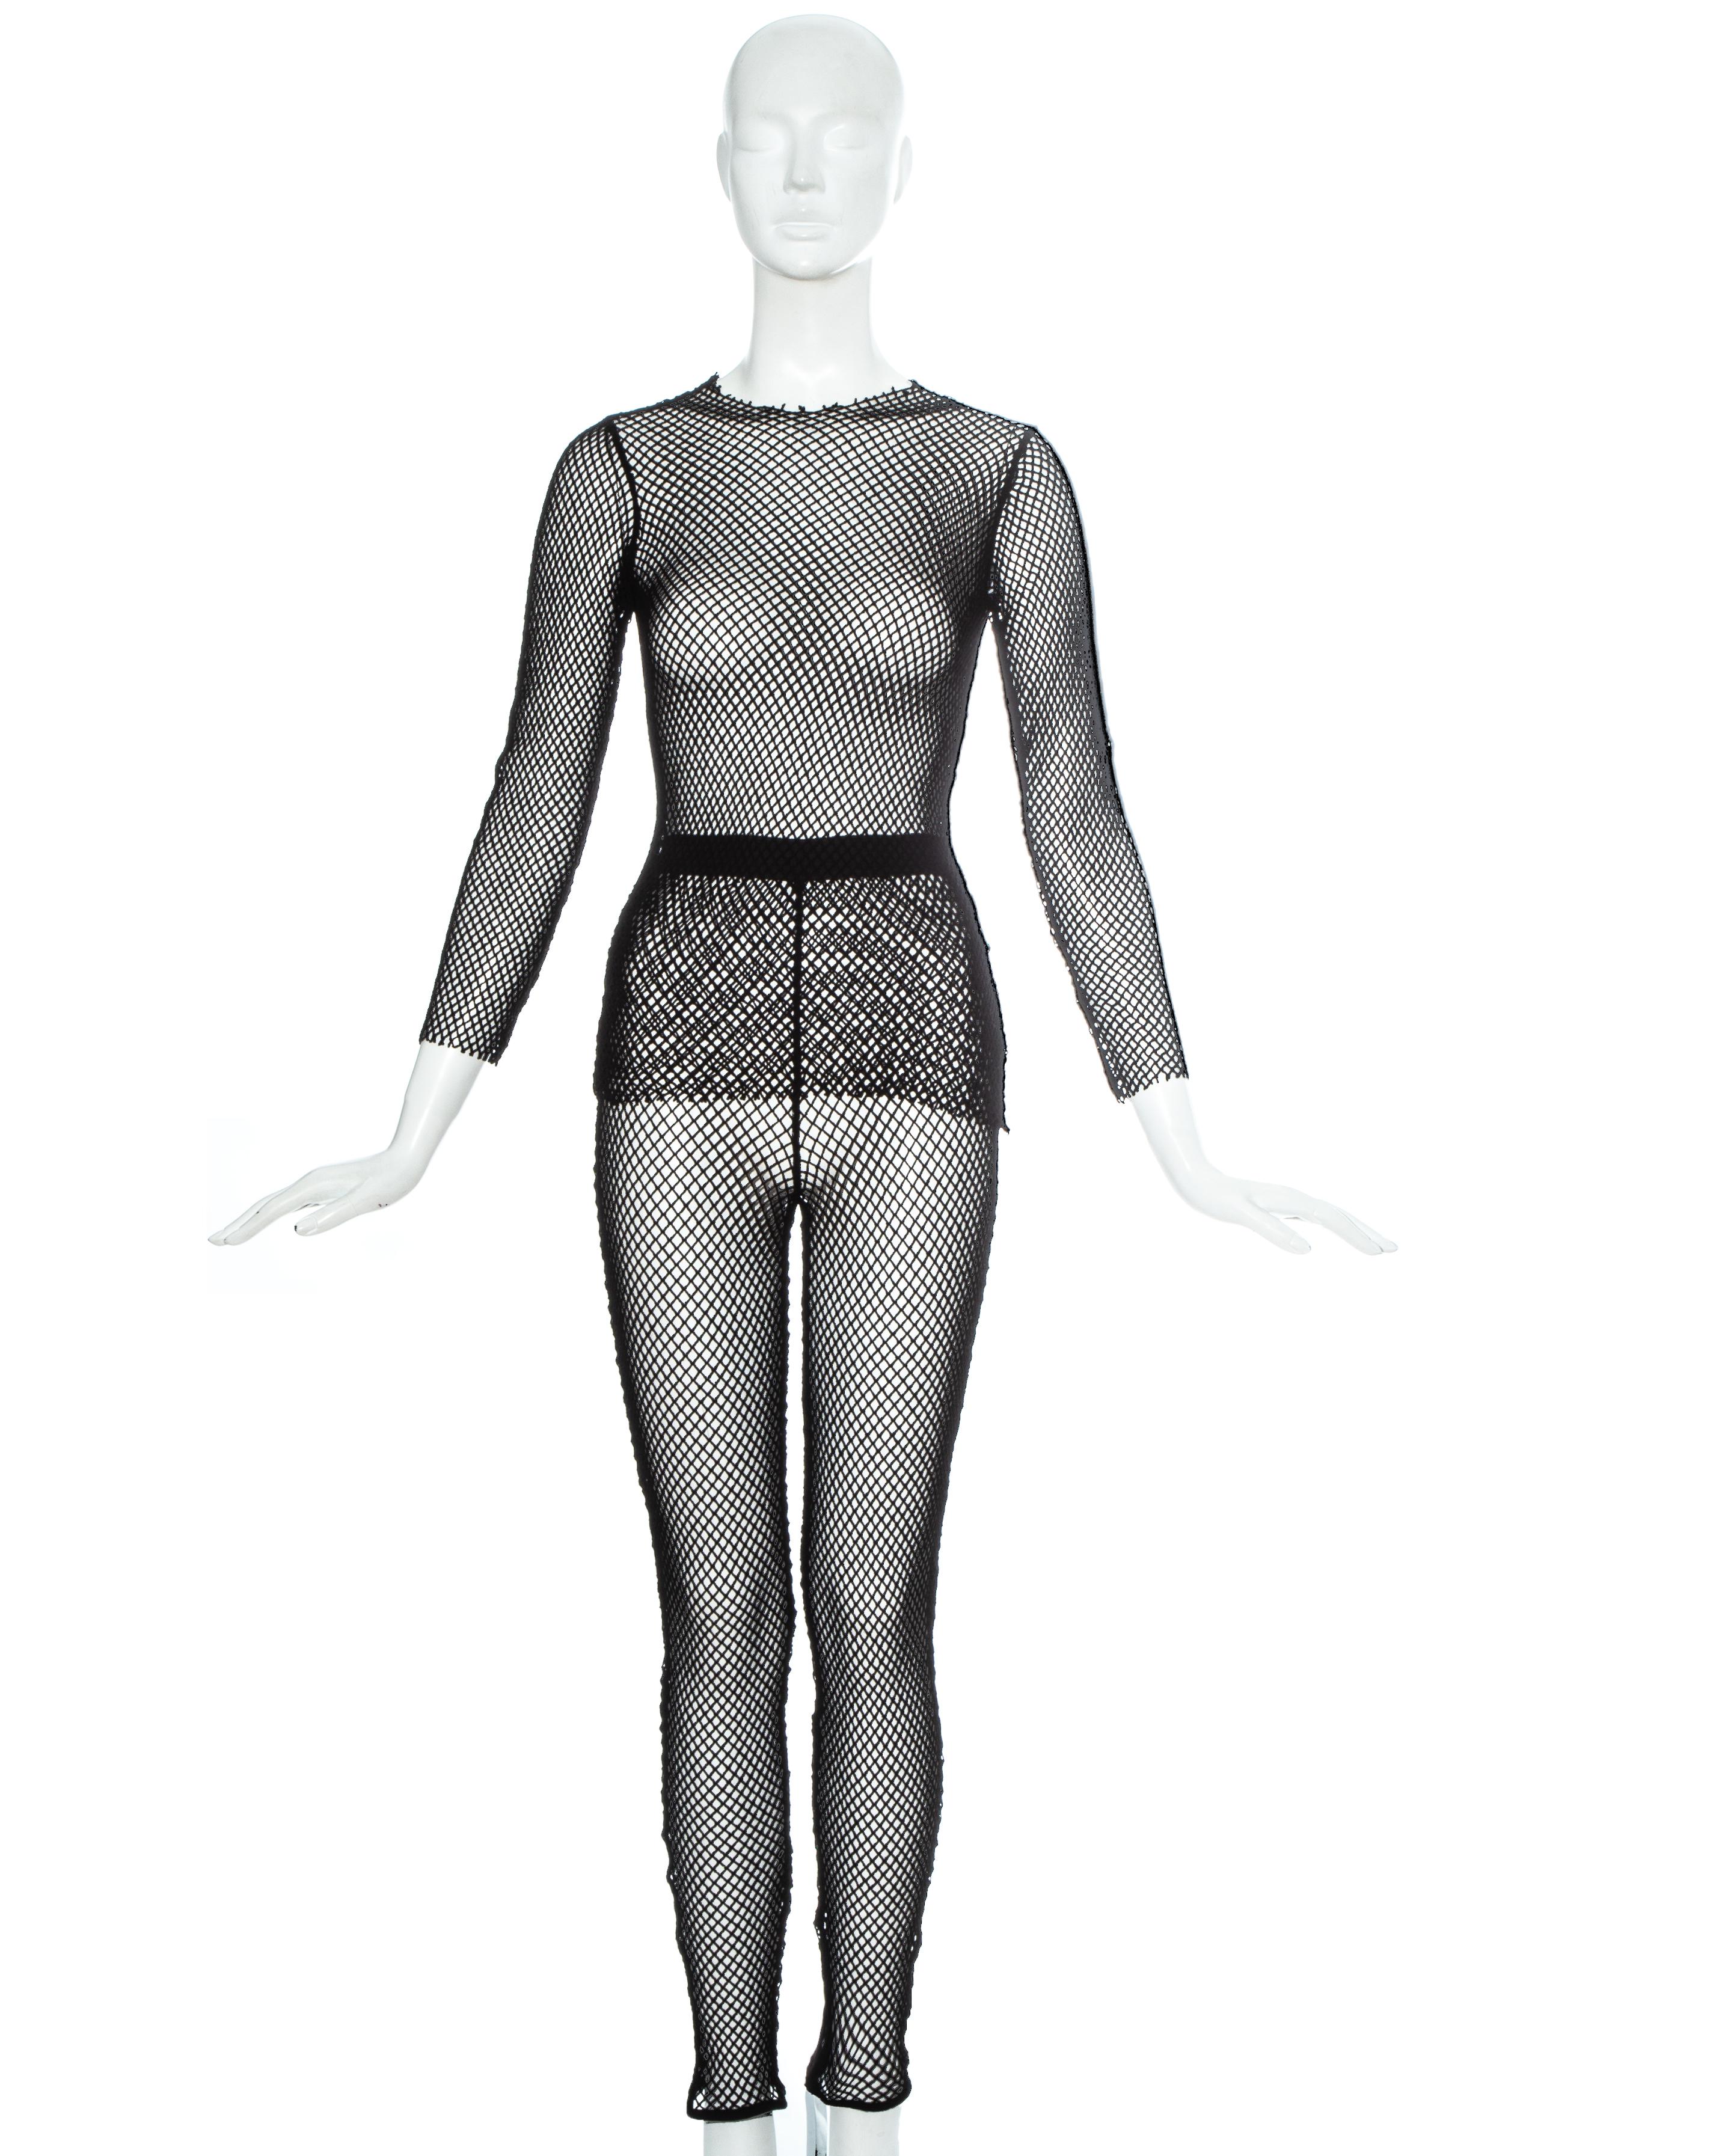 Comme des Garçons black fishnet top and leggings set

Fall-Winter 1991